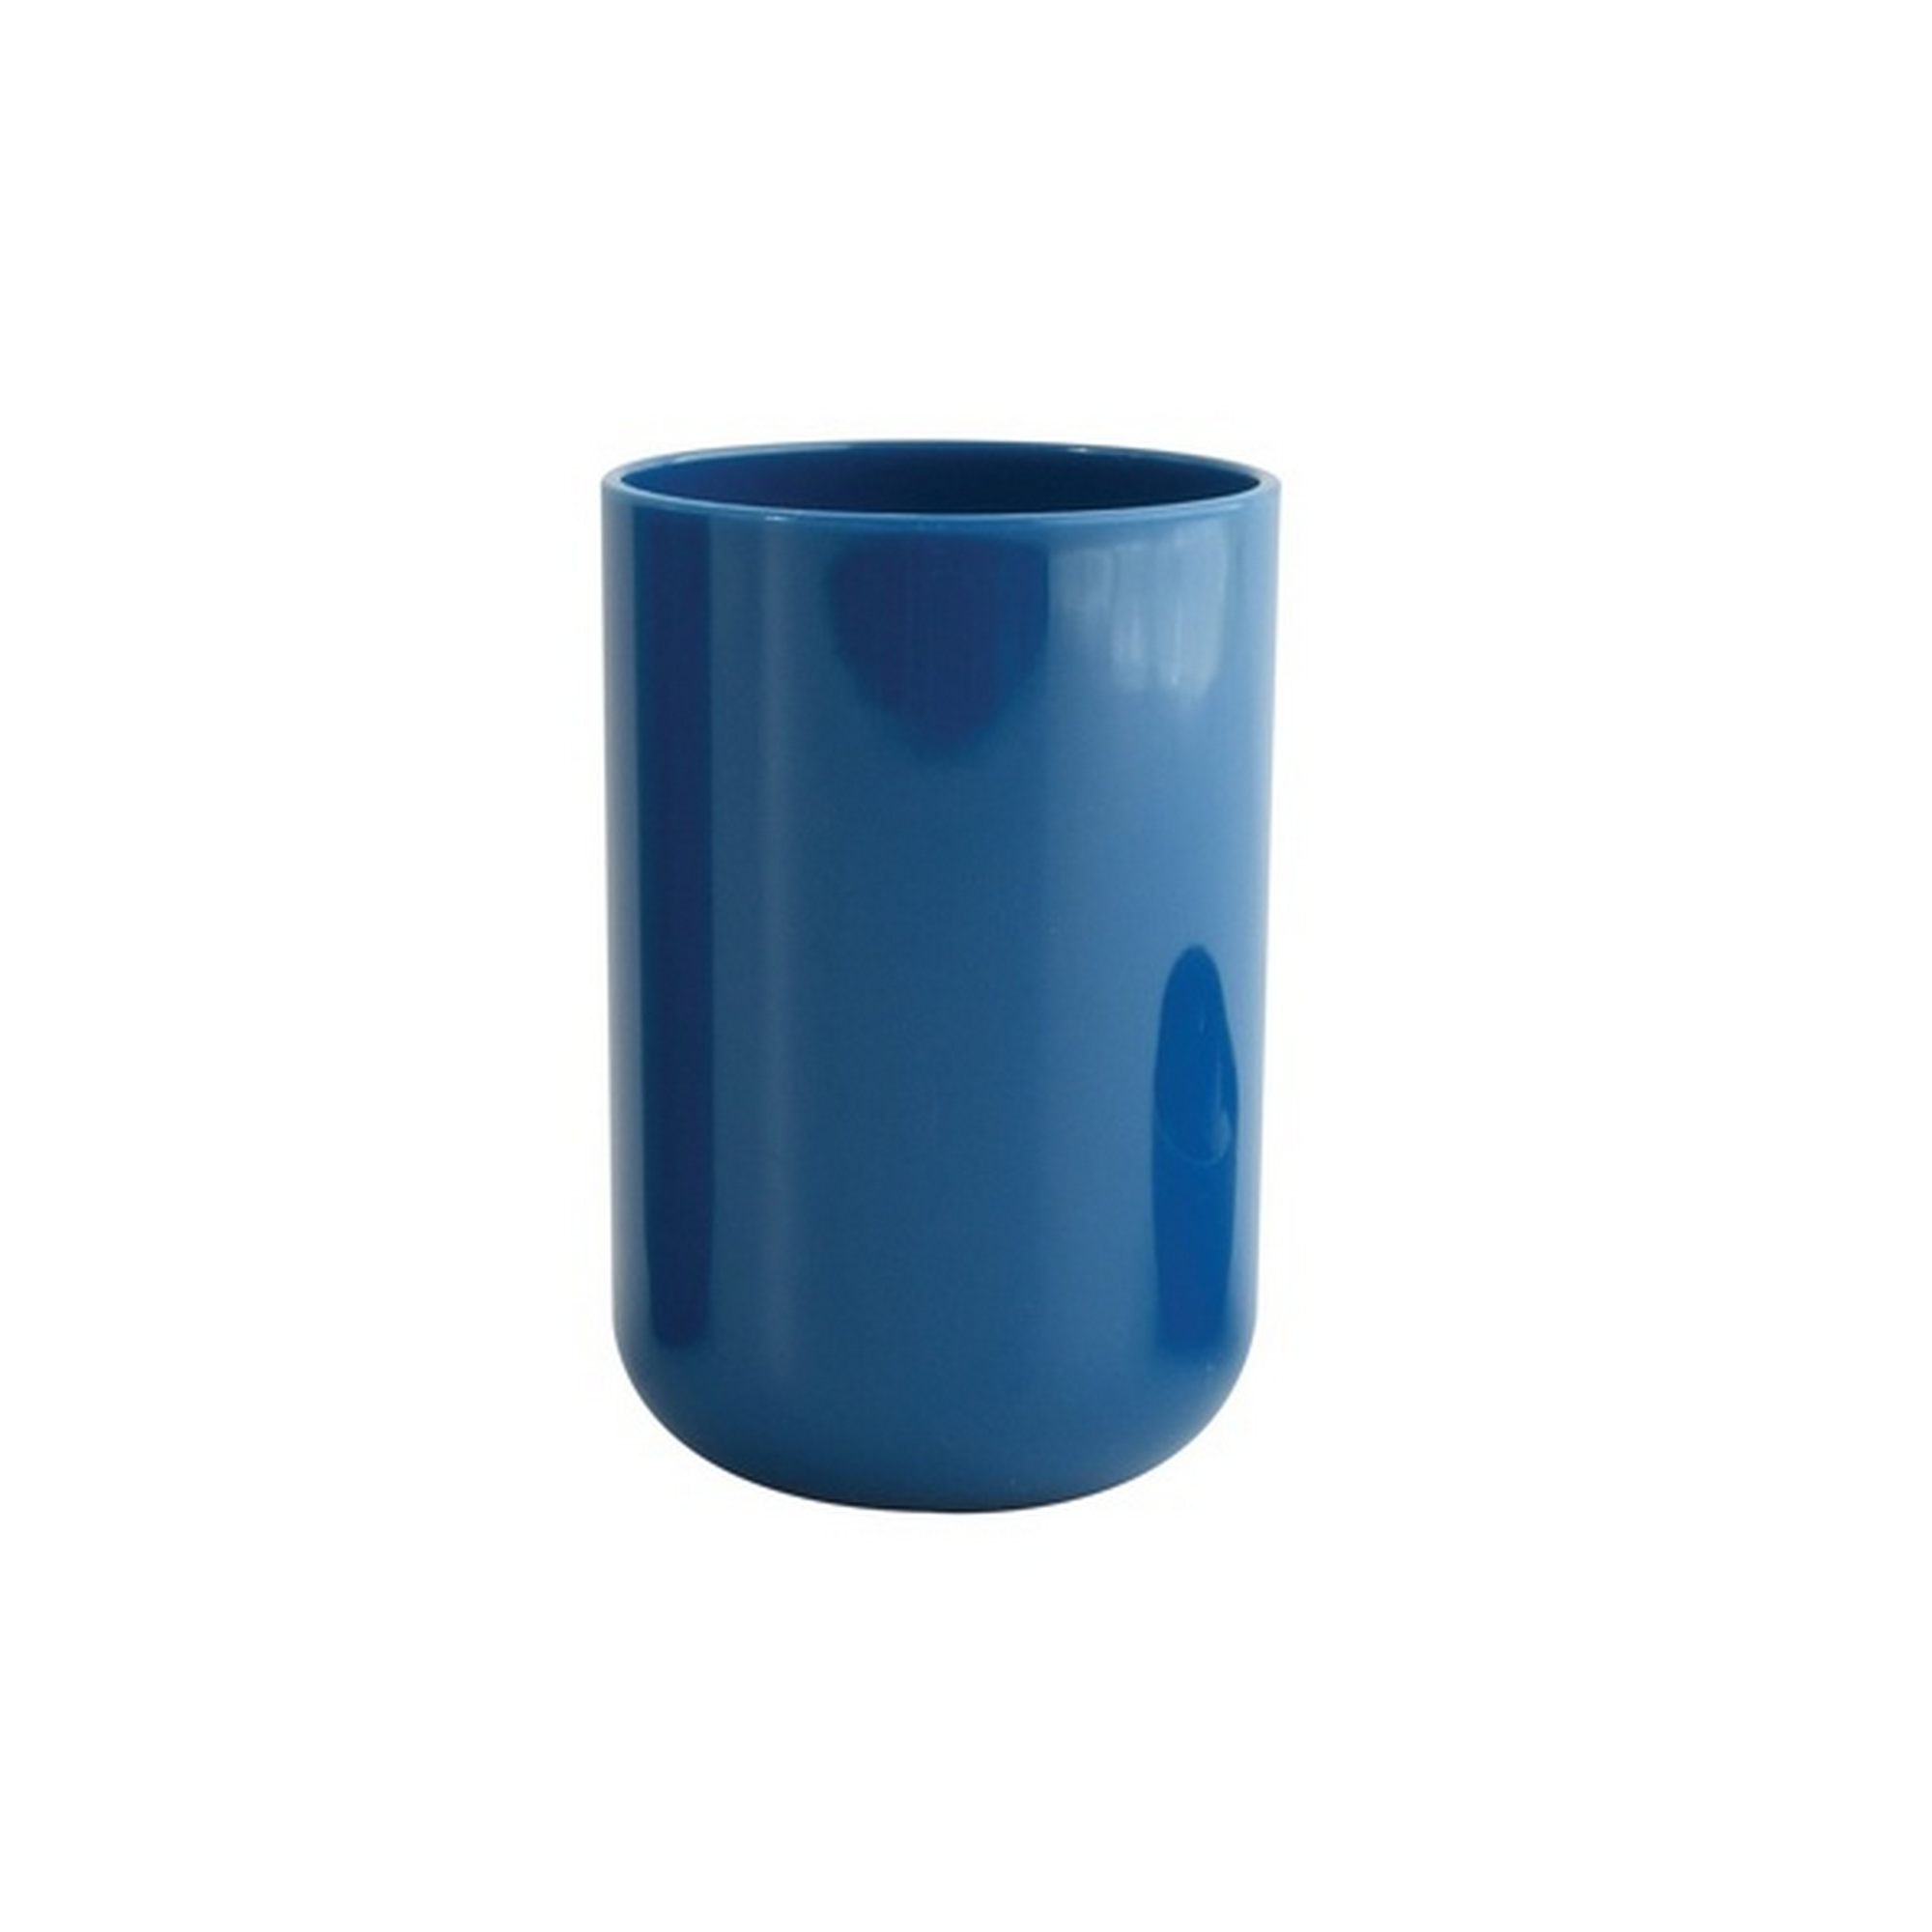 Zahnputzbecher 'Inagua' Polystyrol dunkelblau Ø 7,1 x 10,5 cm + product picture